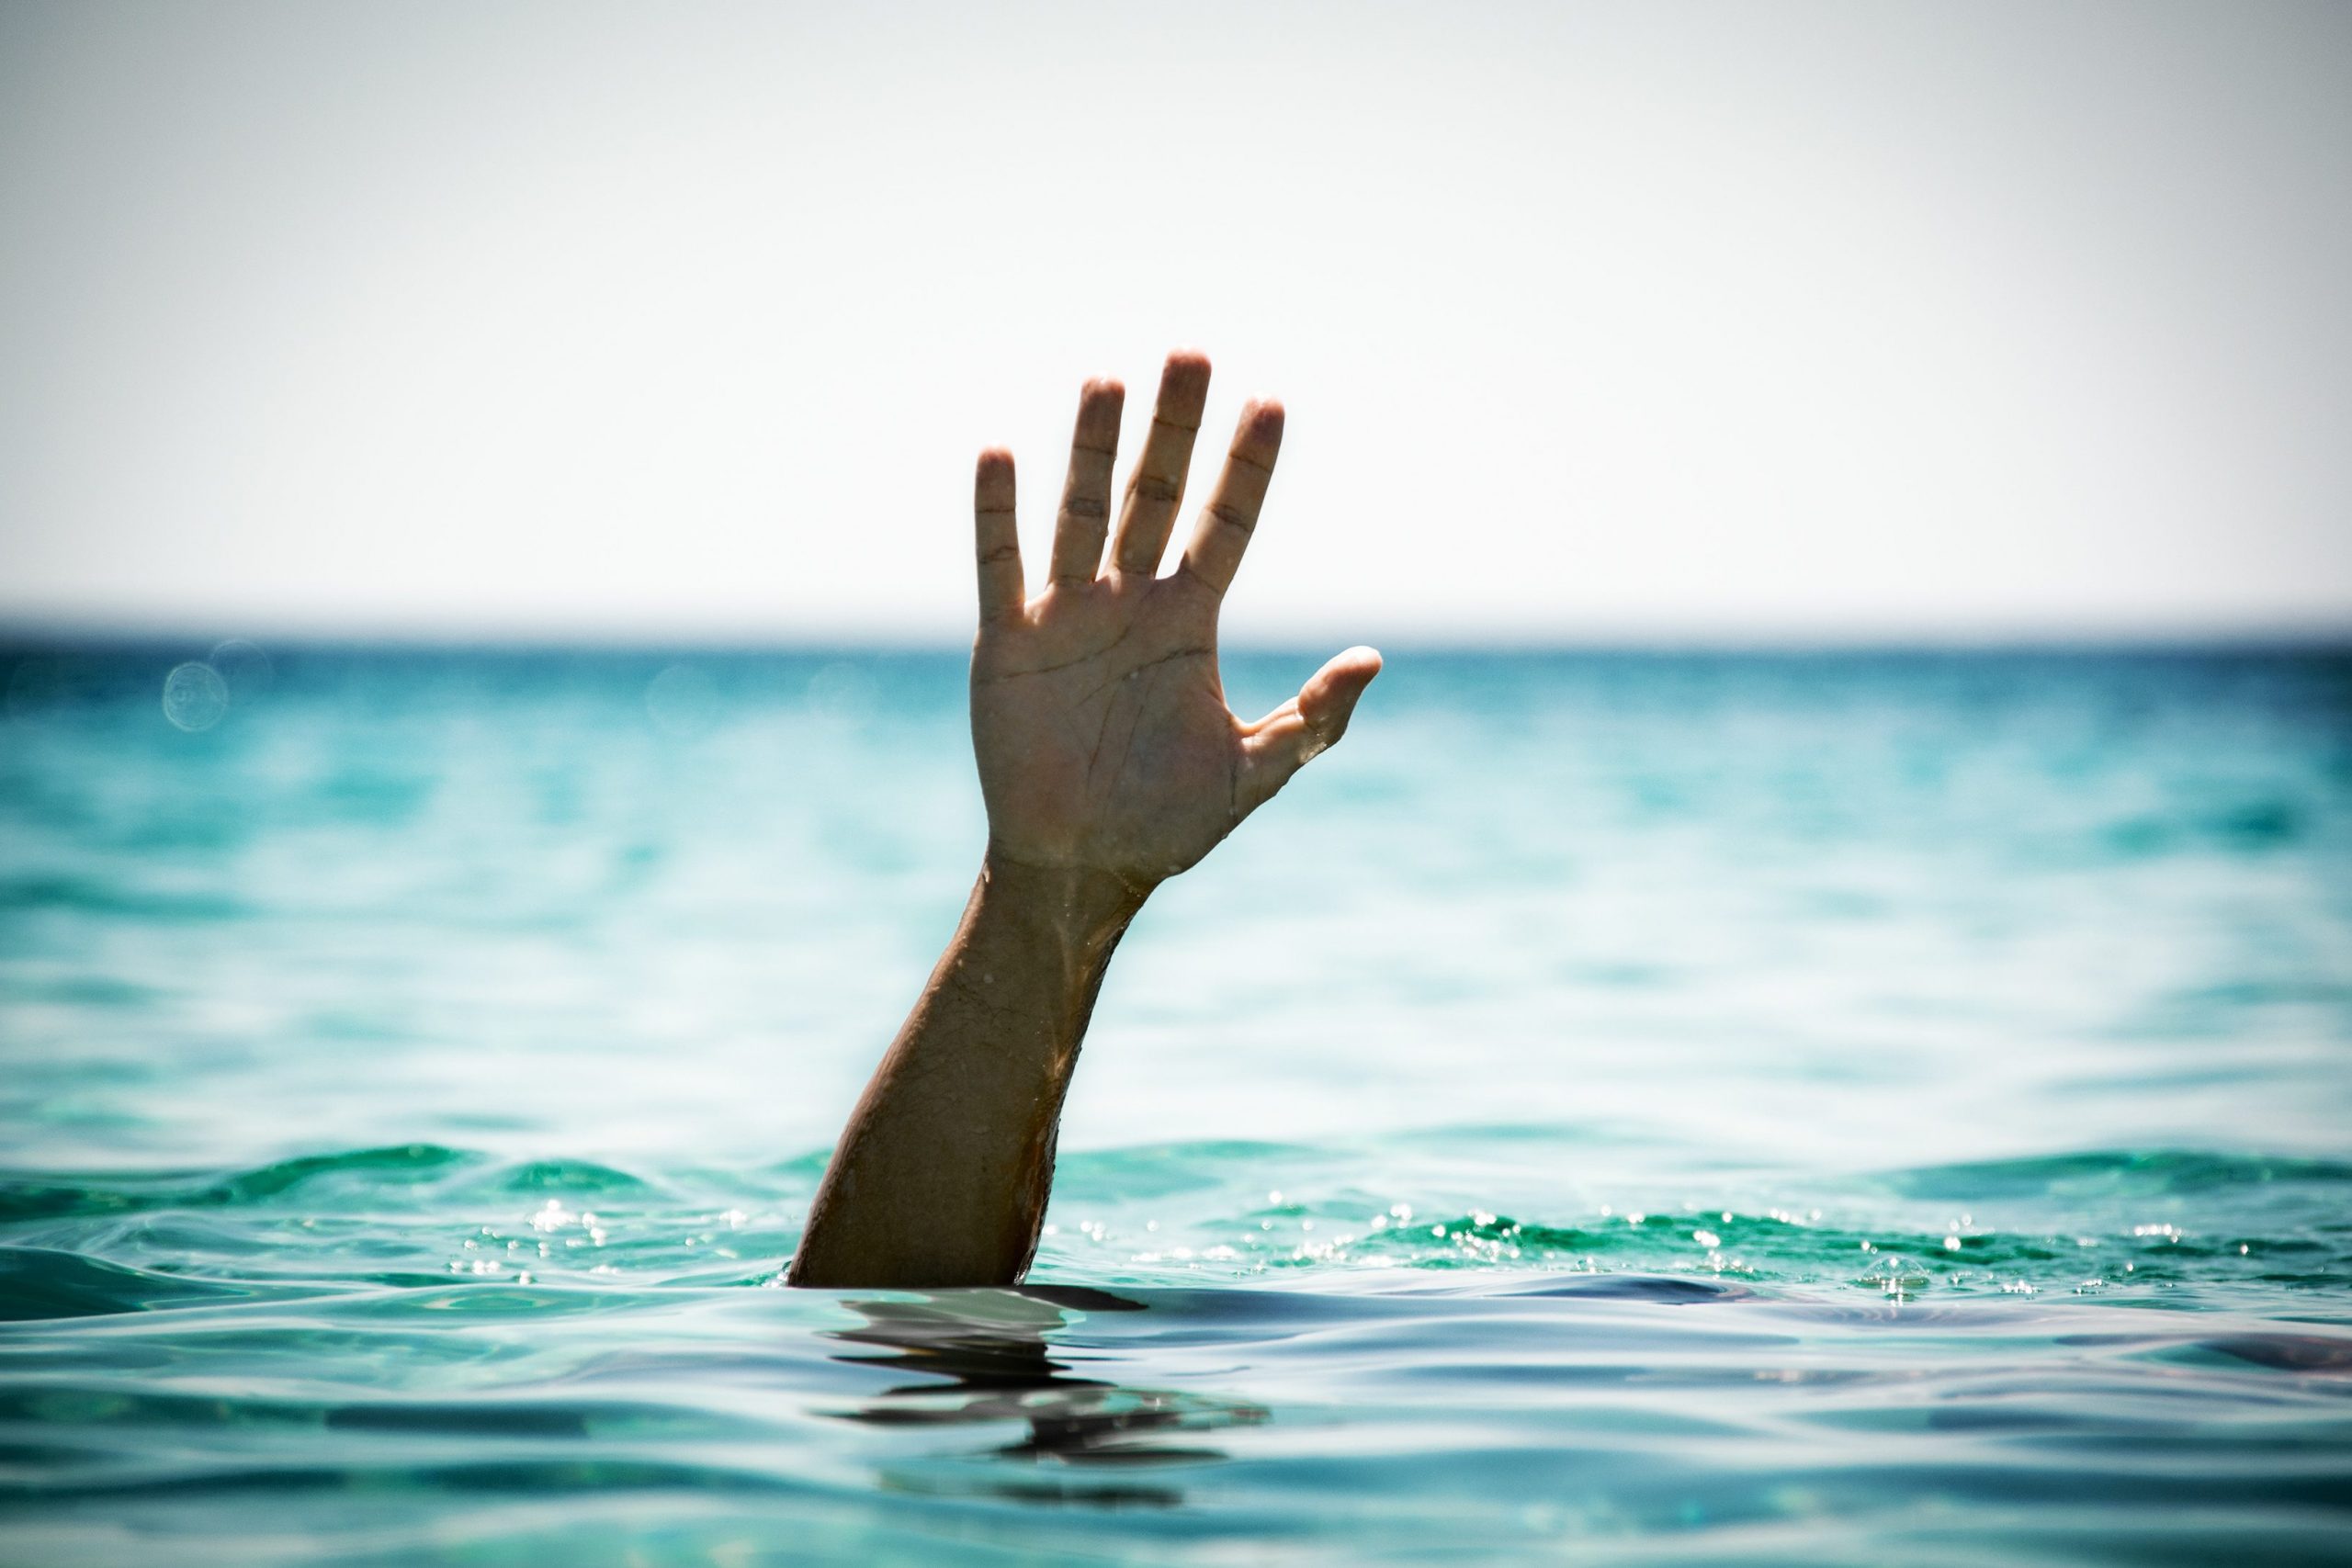 20 children drowned in Apam sea